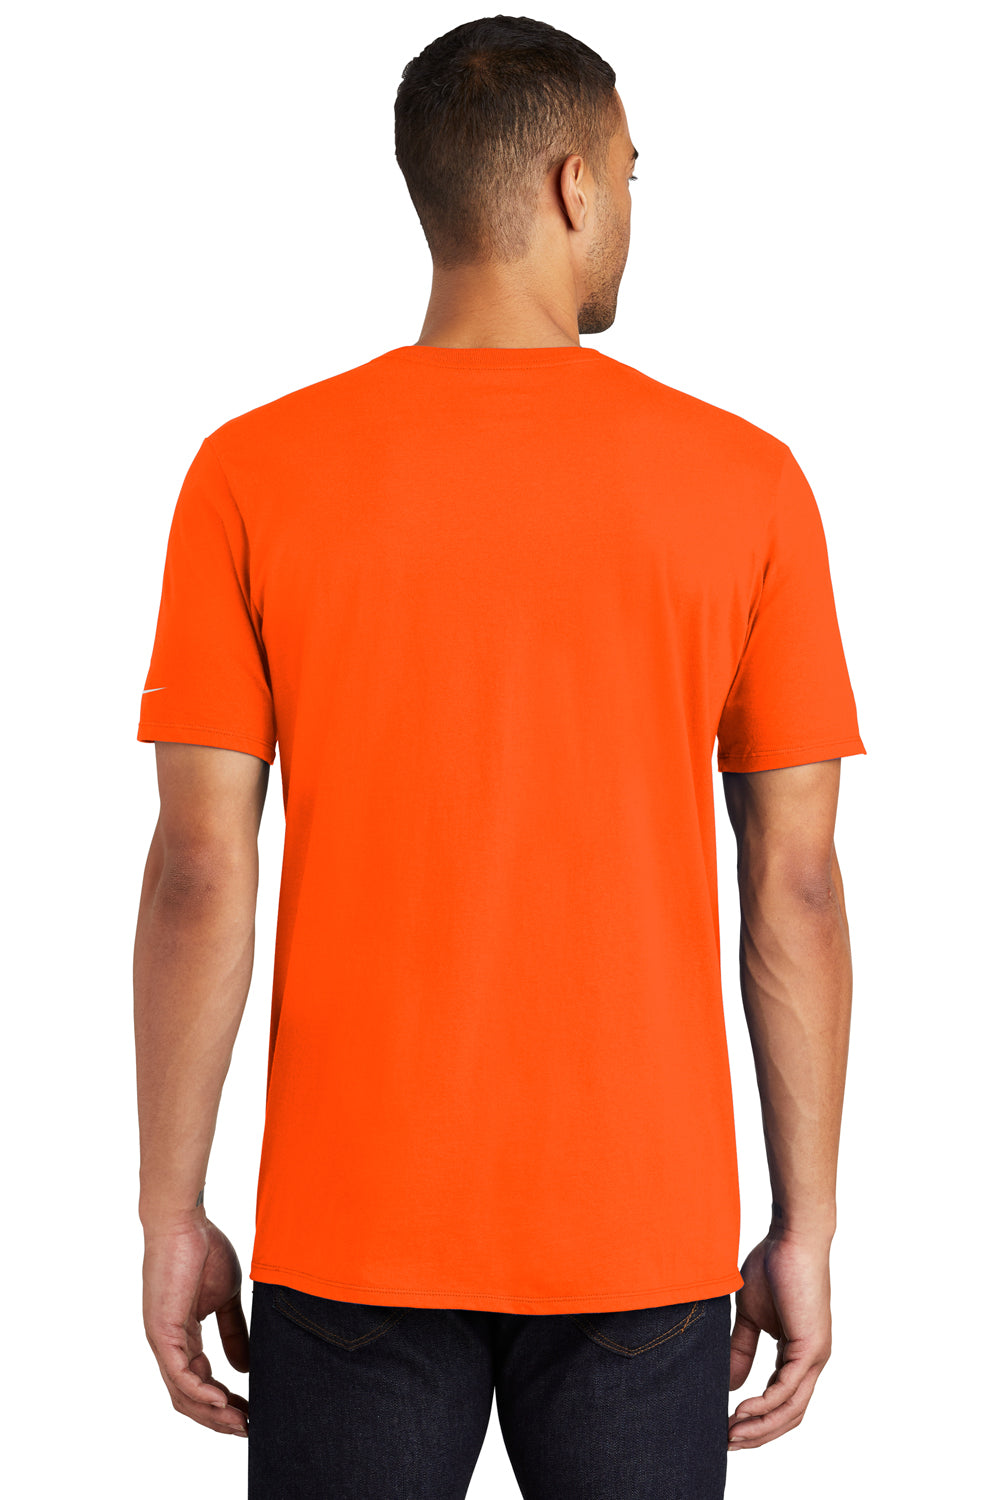 Nike NKBQ5233 Mens Core Short Sleeve Crewneck T-Shirt Orange Back